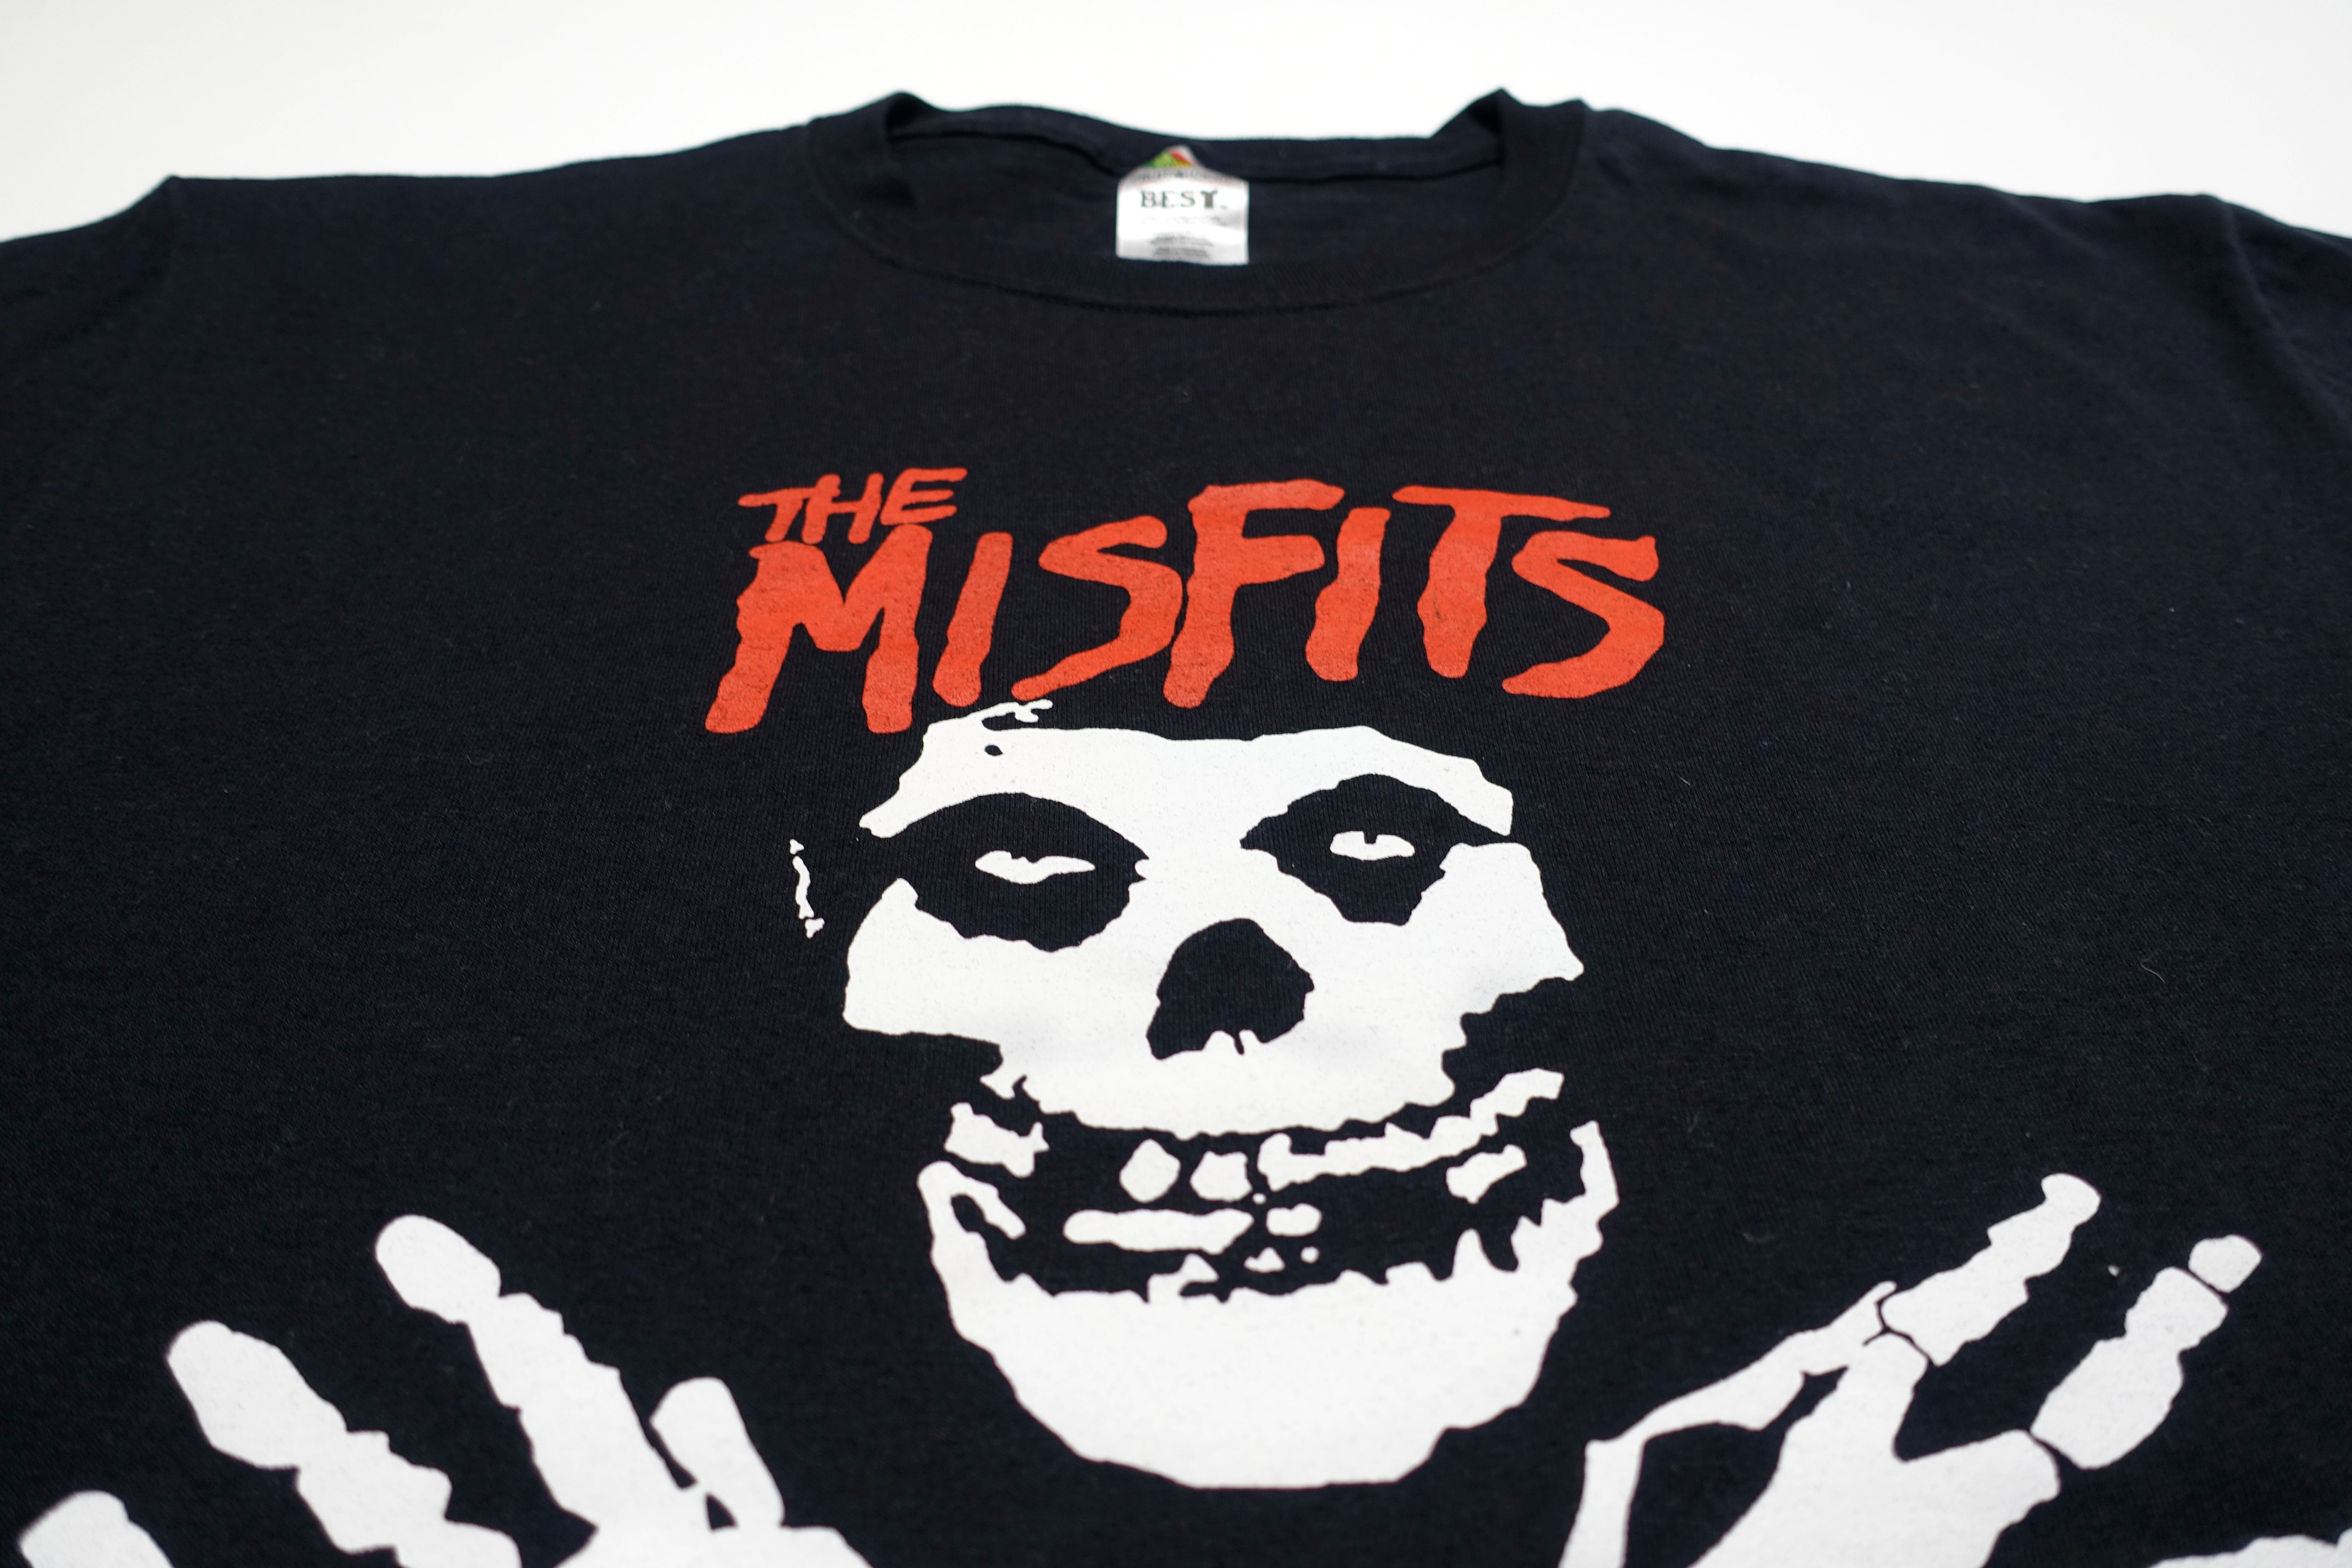 Misfits - Crimson Ghost Coffin Pose Shirt Size Large (Bootleg)